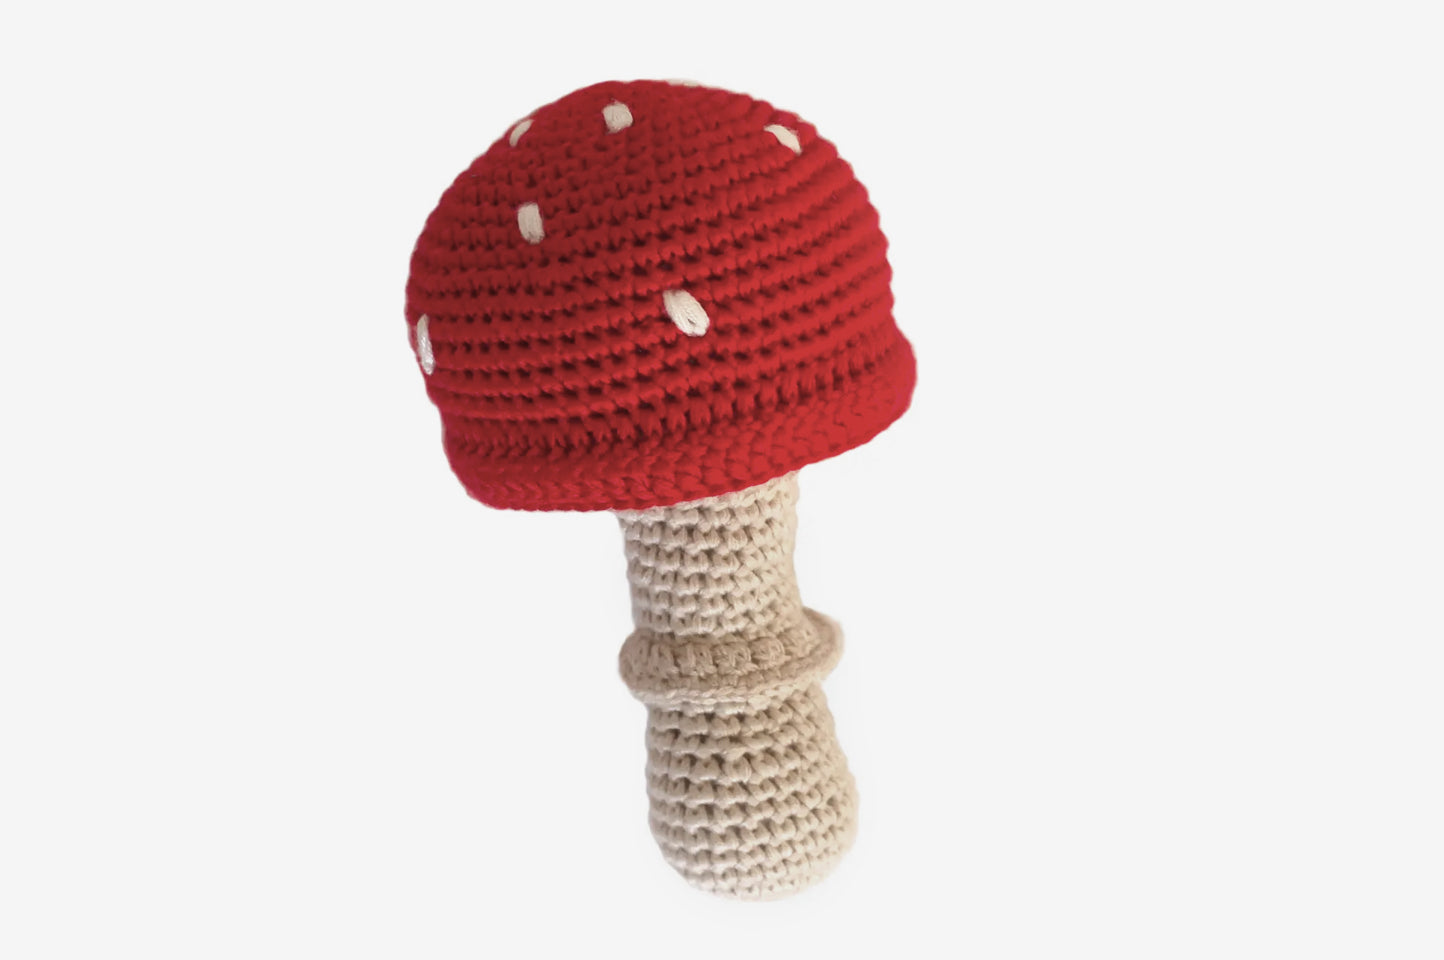 Handmade Crochet baby toadstool mushroom rattle